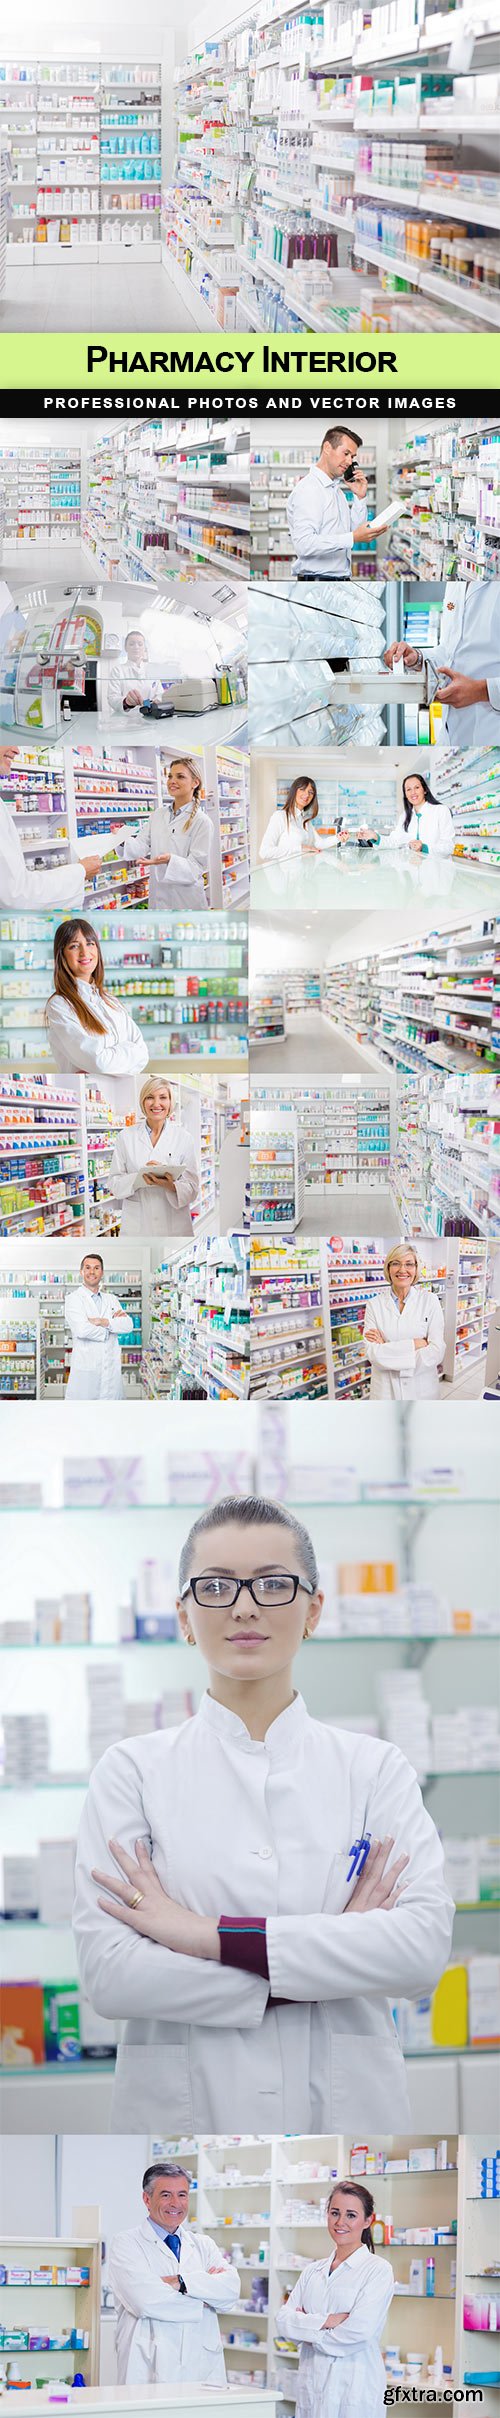 Pharmacy Interior - 14 UHQ JPEG